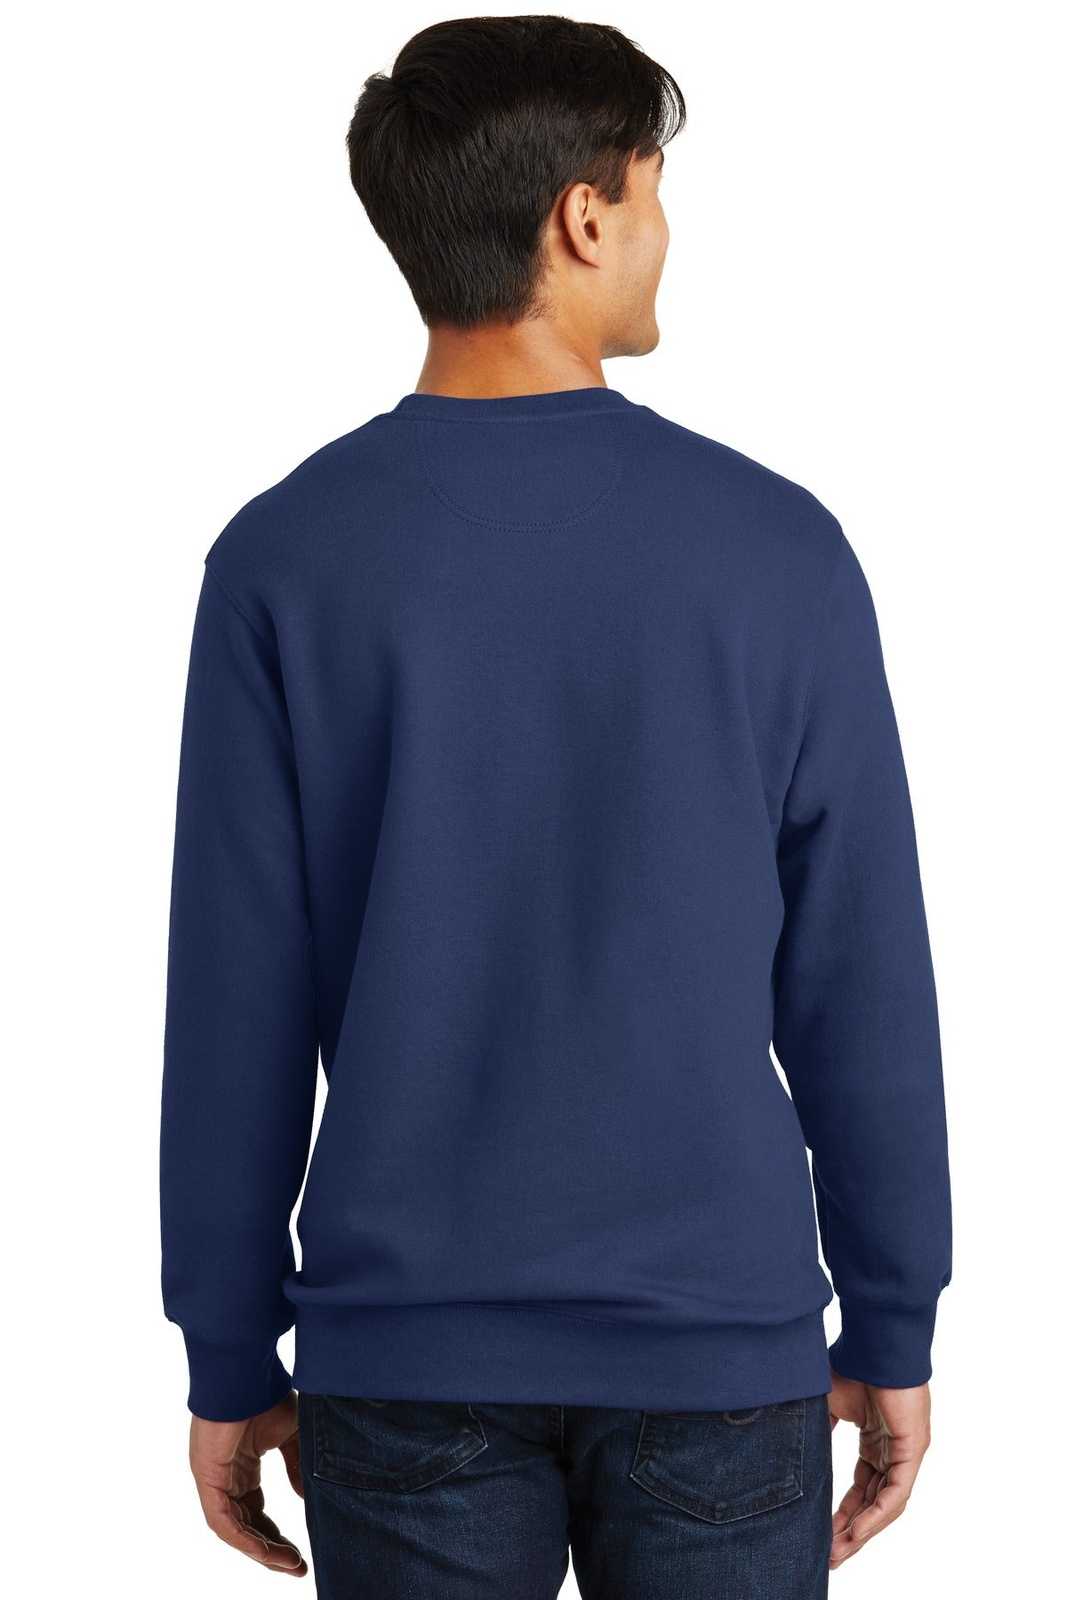 Port & Company PC850 Fan Favorite Fleece Crewneck Sweatshirt - Team Navy - HIT a Double - 1